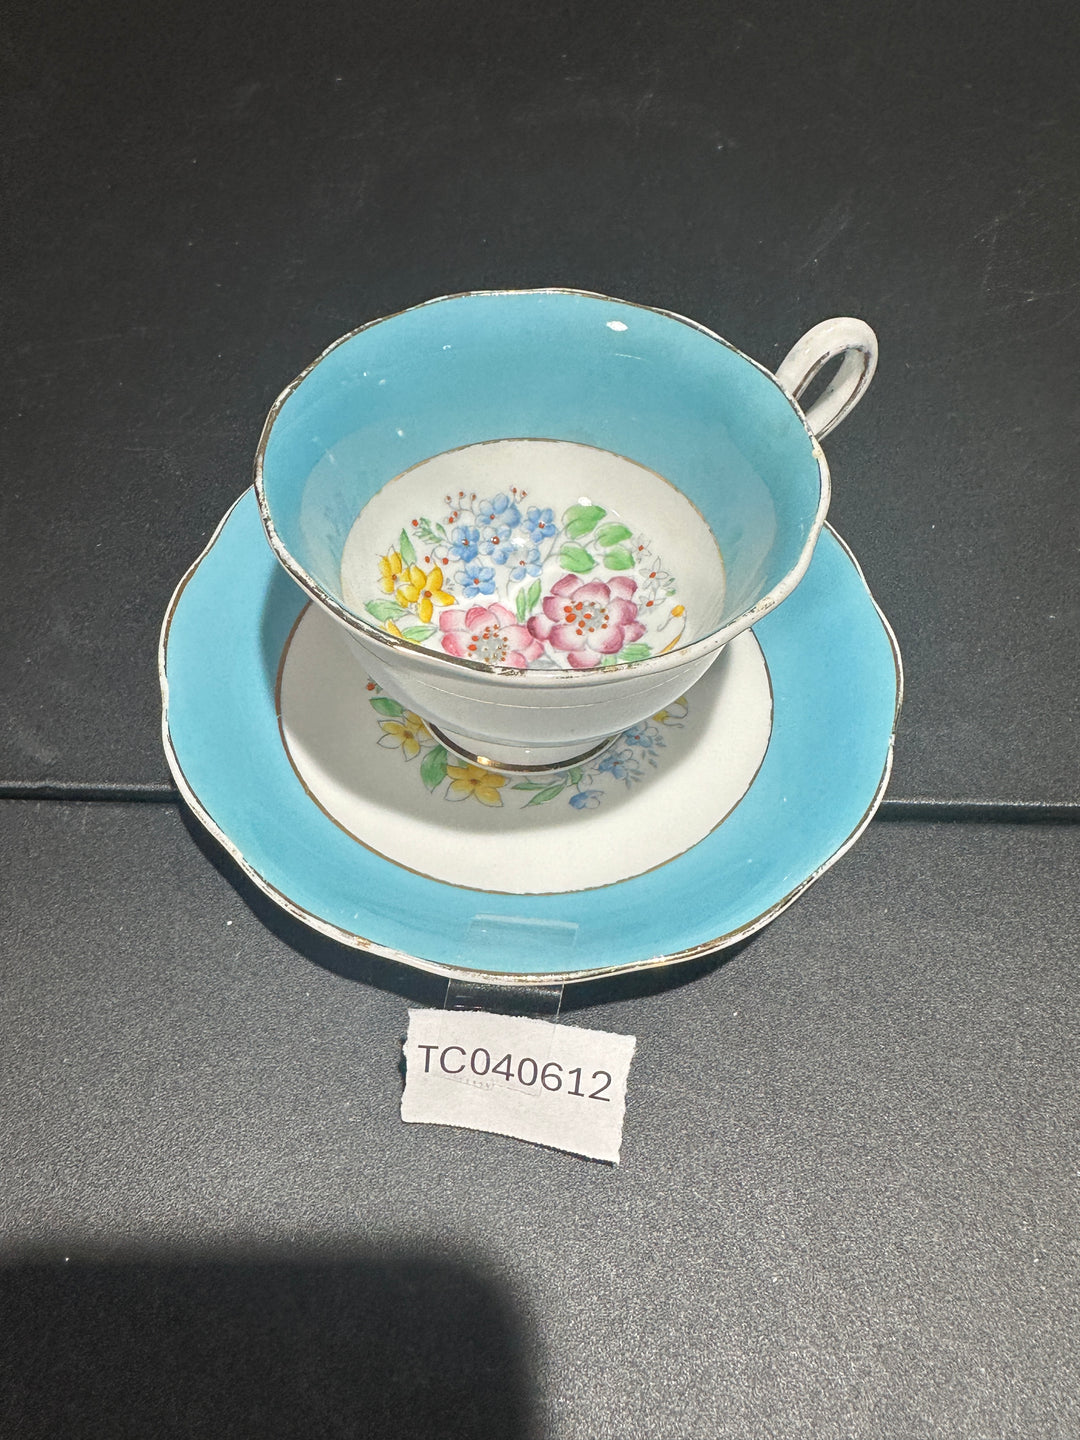 Tea Cup TC040612